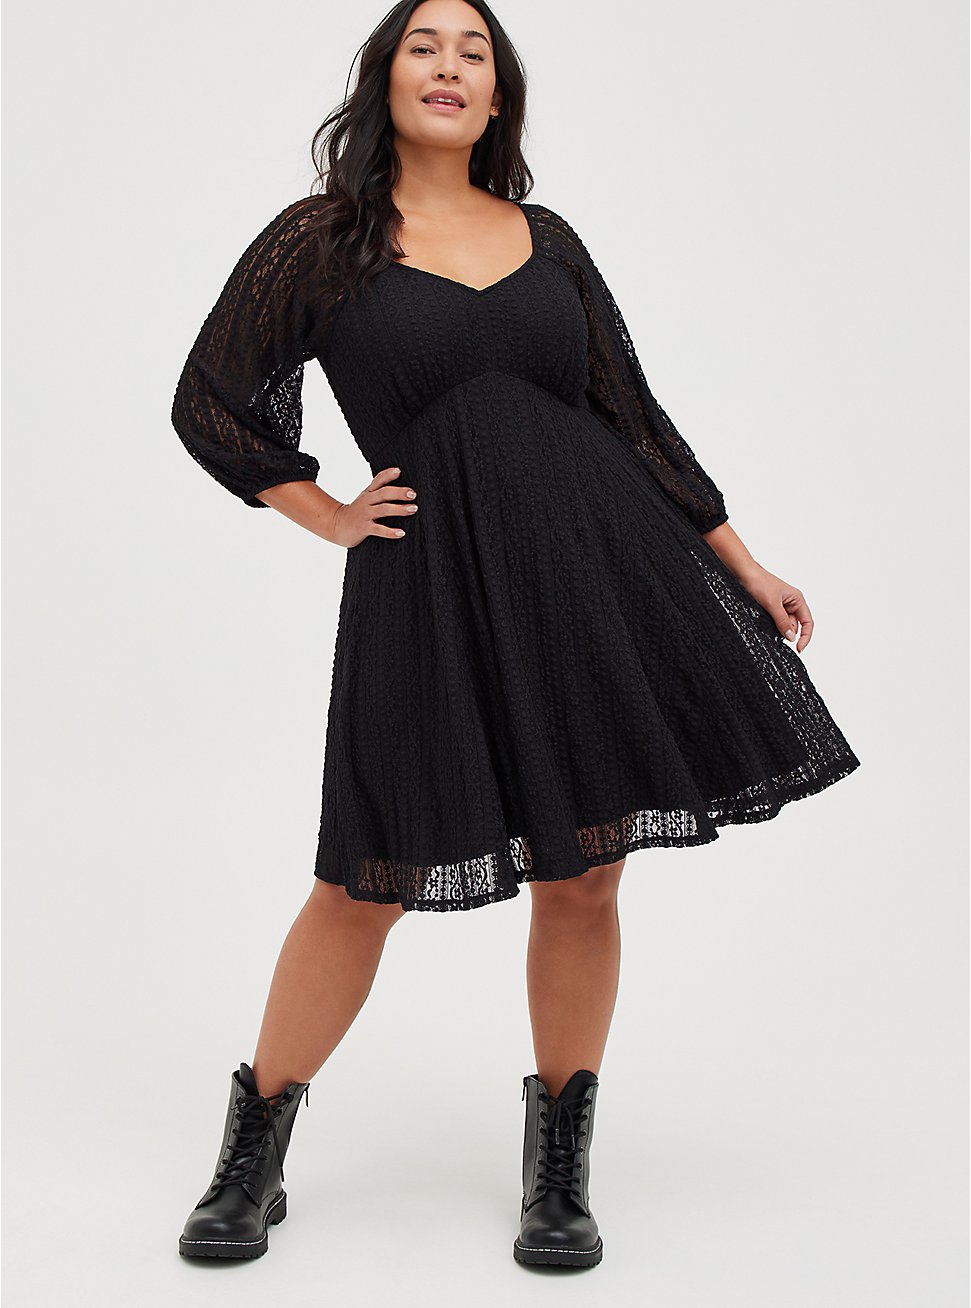 Fit & Flare Mini Dress - Lace Black, DEEP BLACK, hi-res